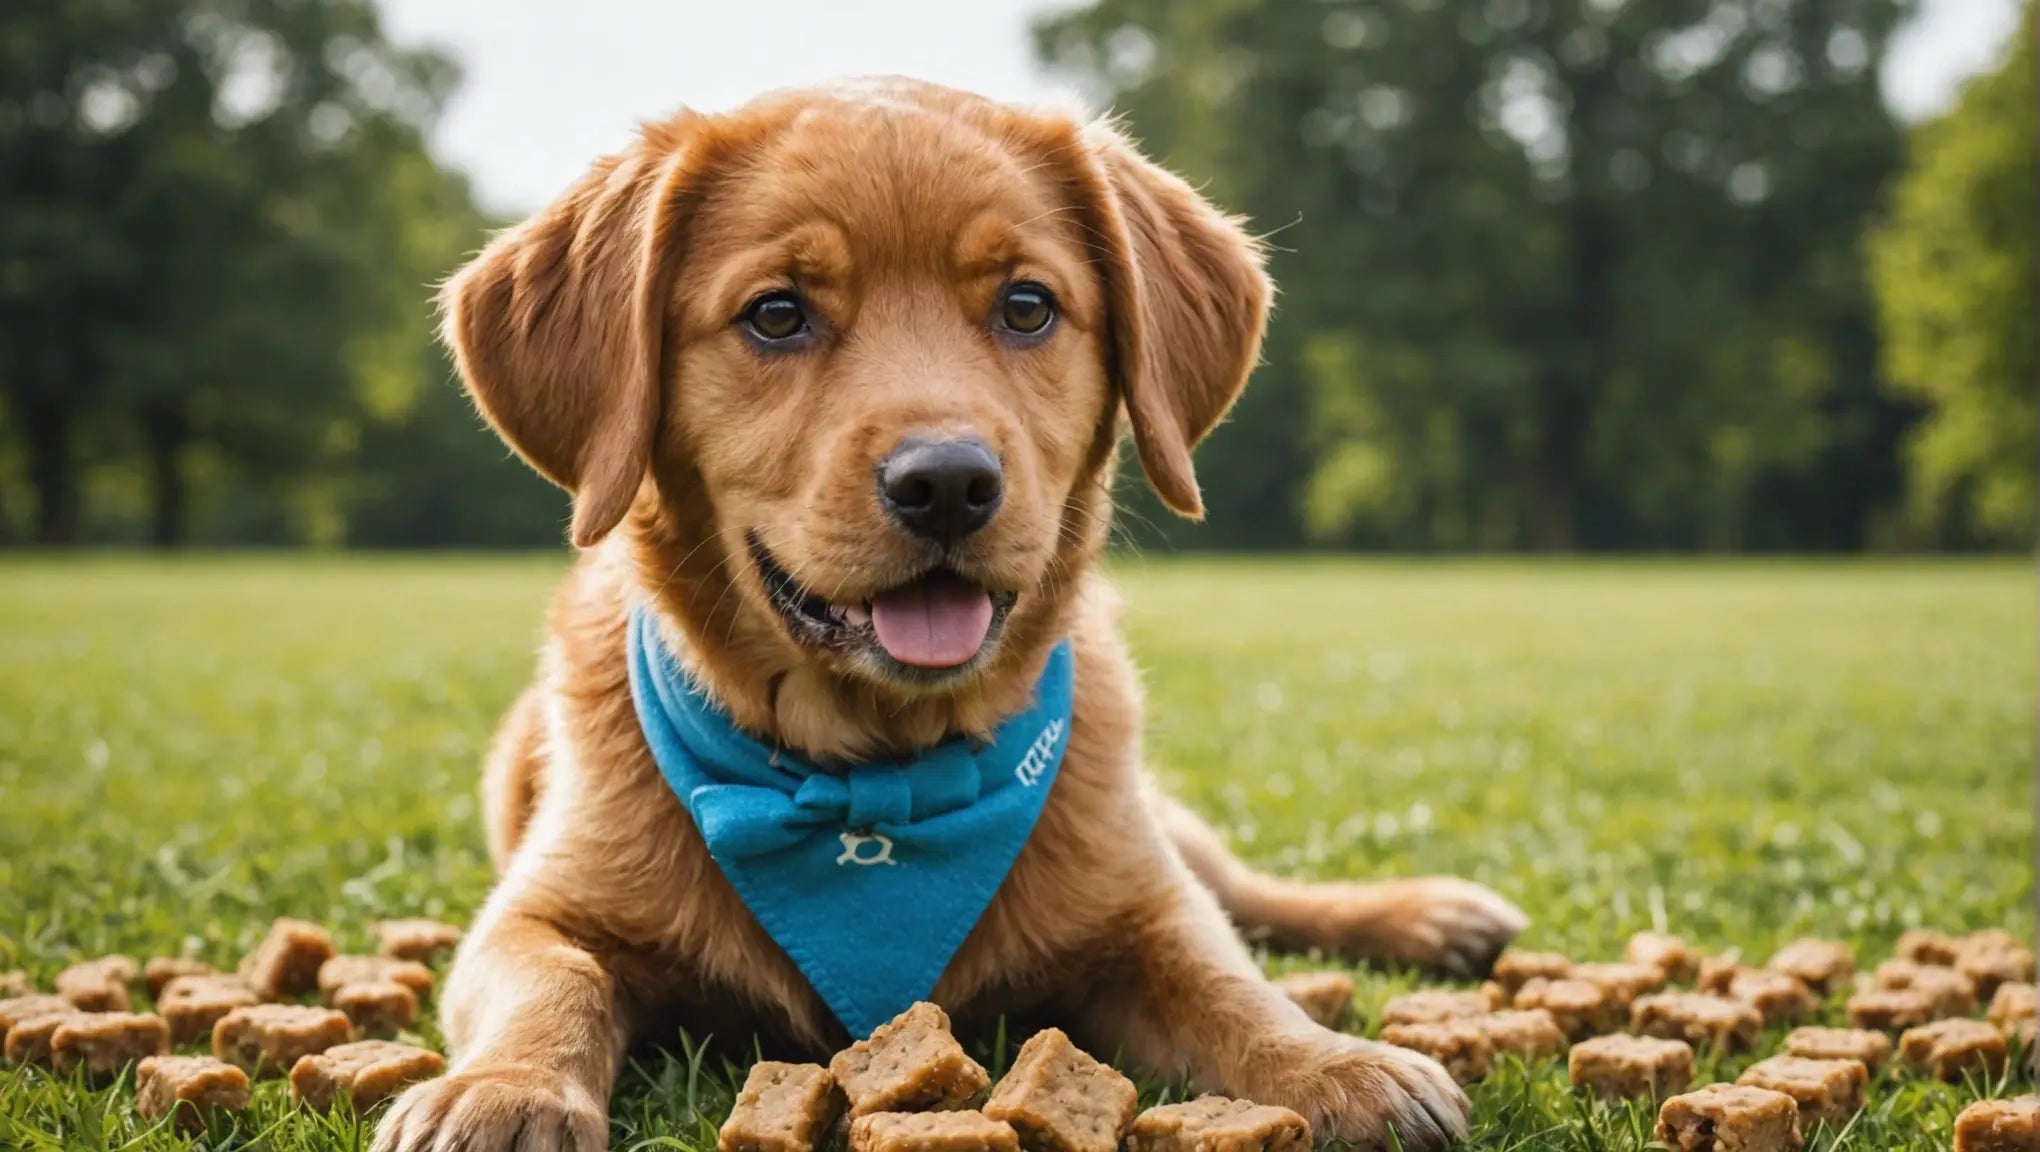 10 Best Soft Dog Treats for Training